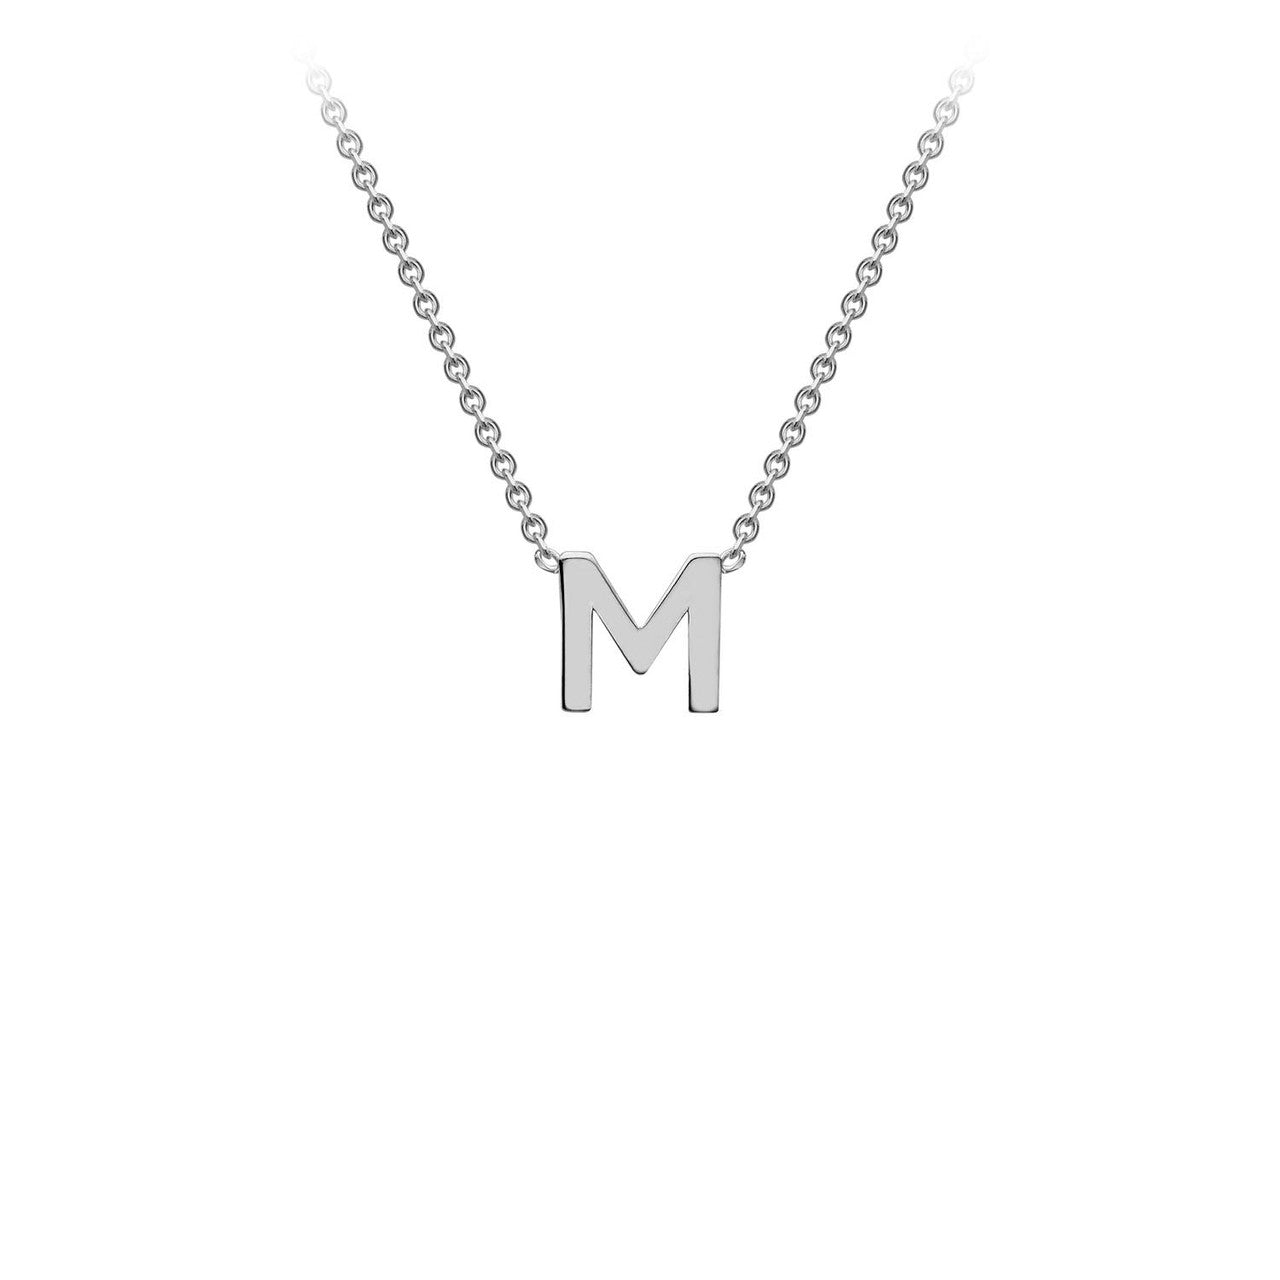 Ice Jewellery 9K White Gold 'M' Initial Adjustable Letter Necklace 38/43cm - 5.19.0162 | Ice Jewellery Australia